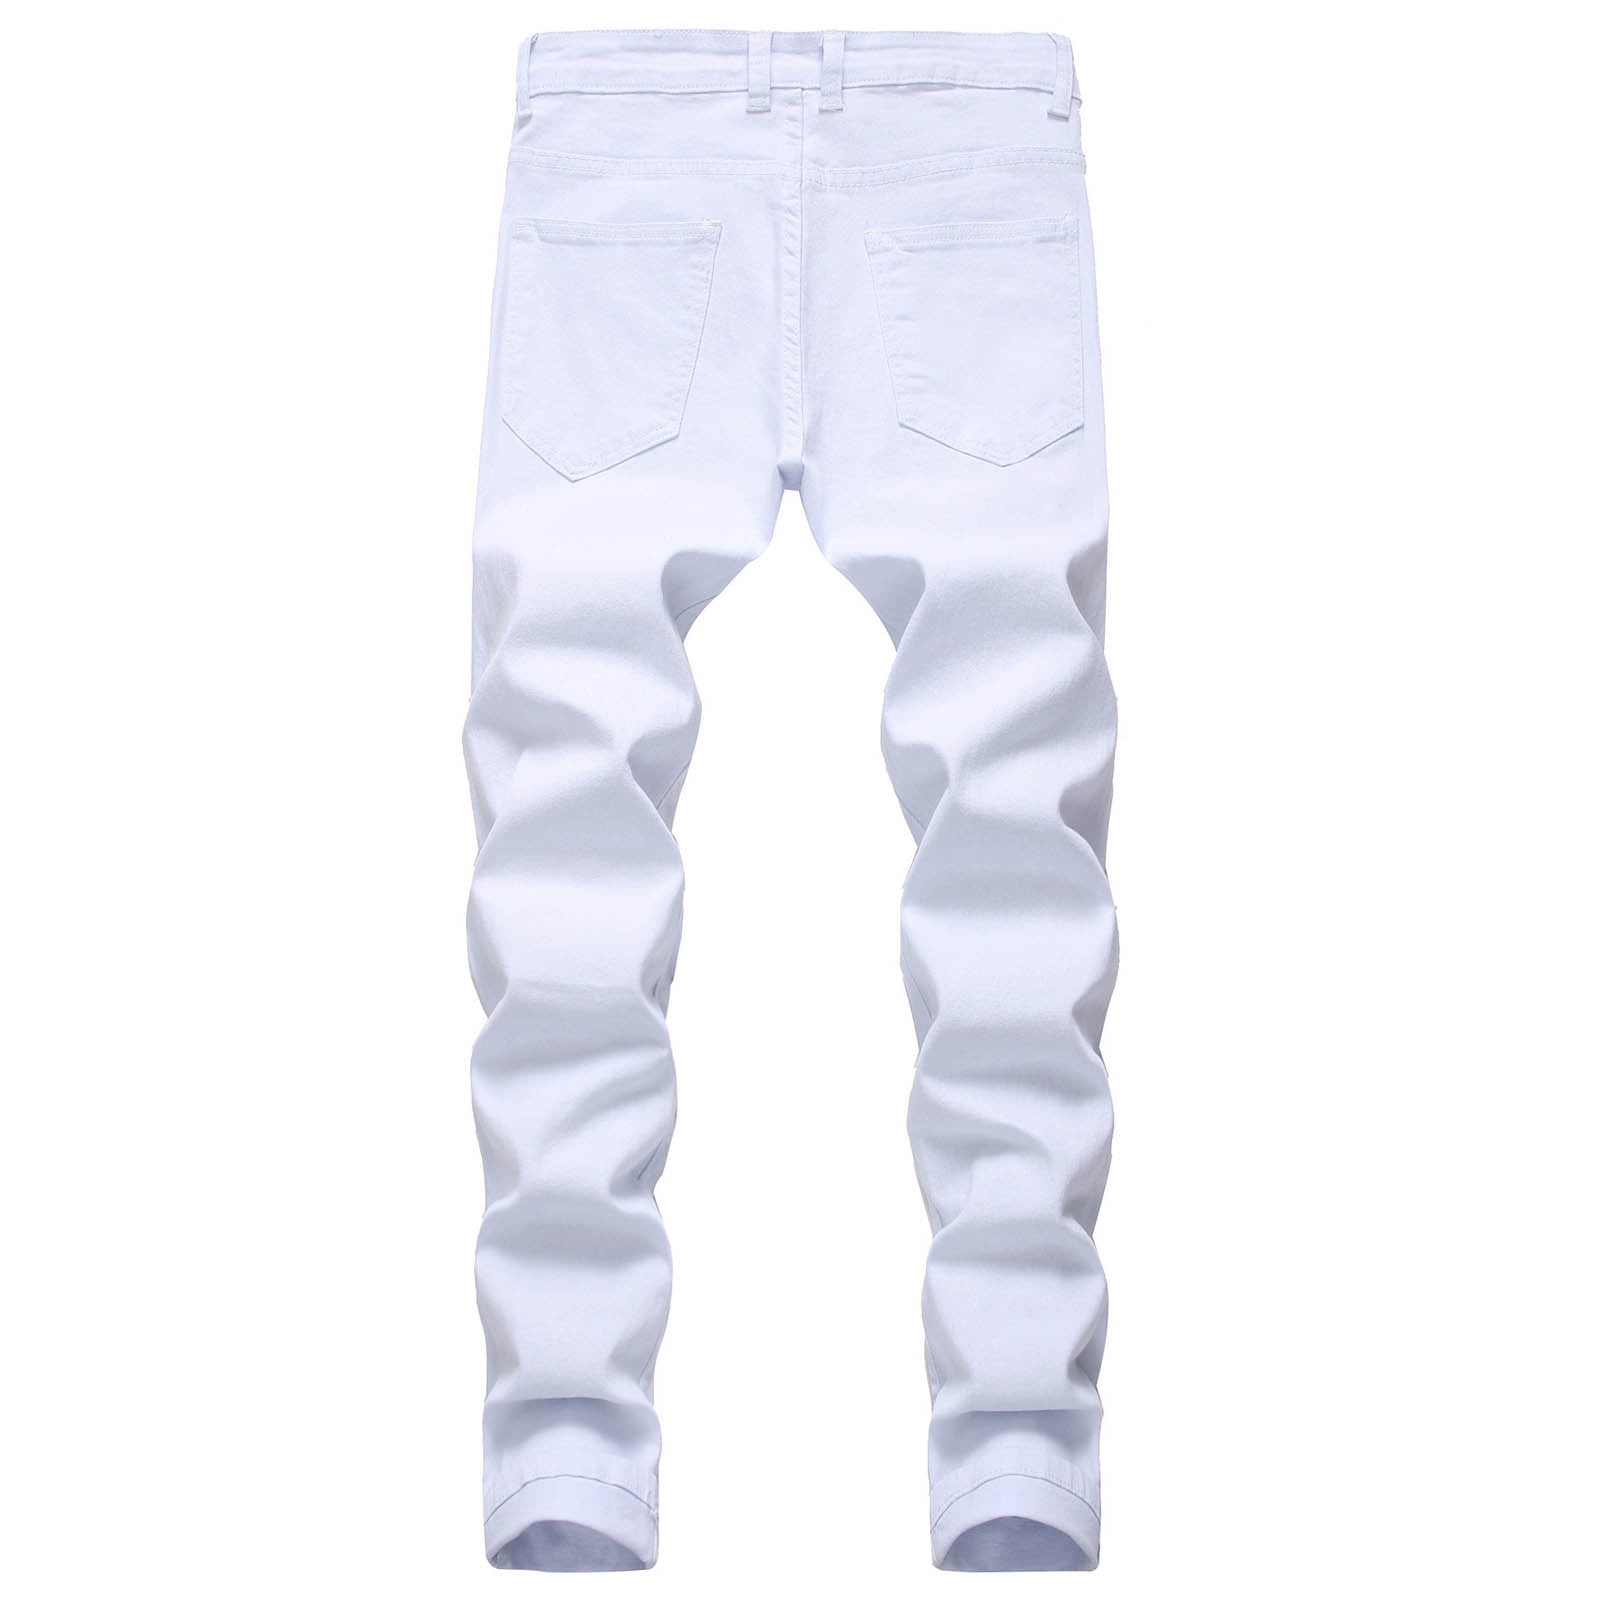 Calsunbaby Men's Distressed Ripped Biker Moto Denim Pants Slim Fit Jeans  White 28 - Walmart.com